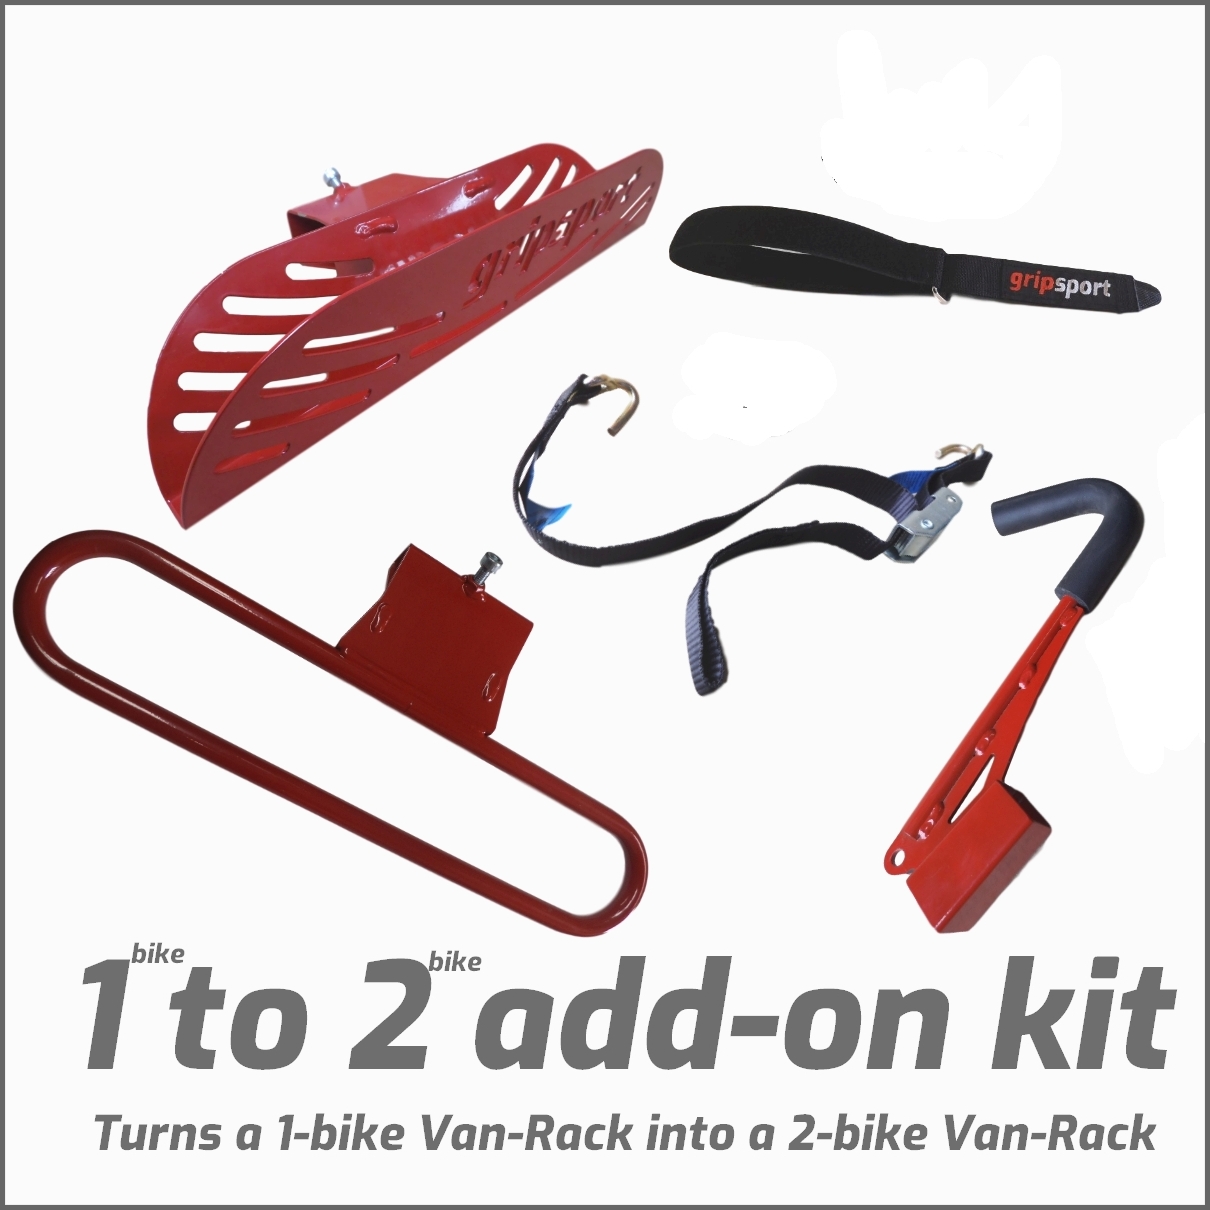 Add-On-Kit (for Van-Rack) 1-bike To 2-bike